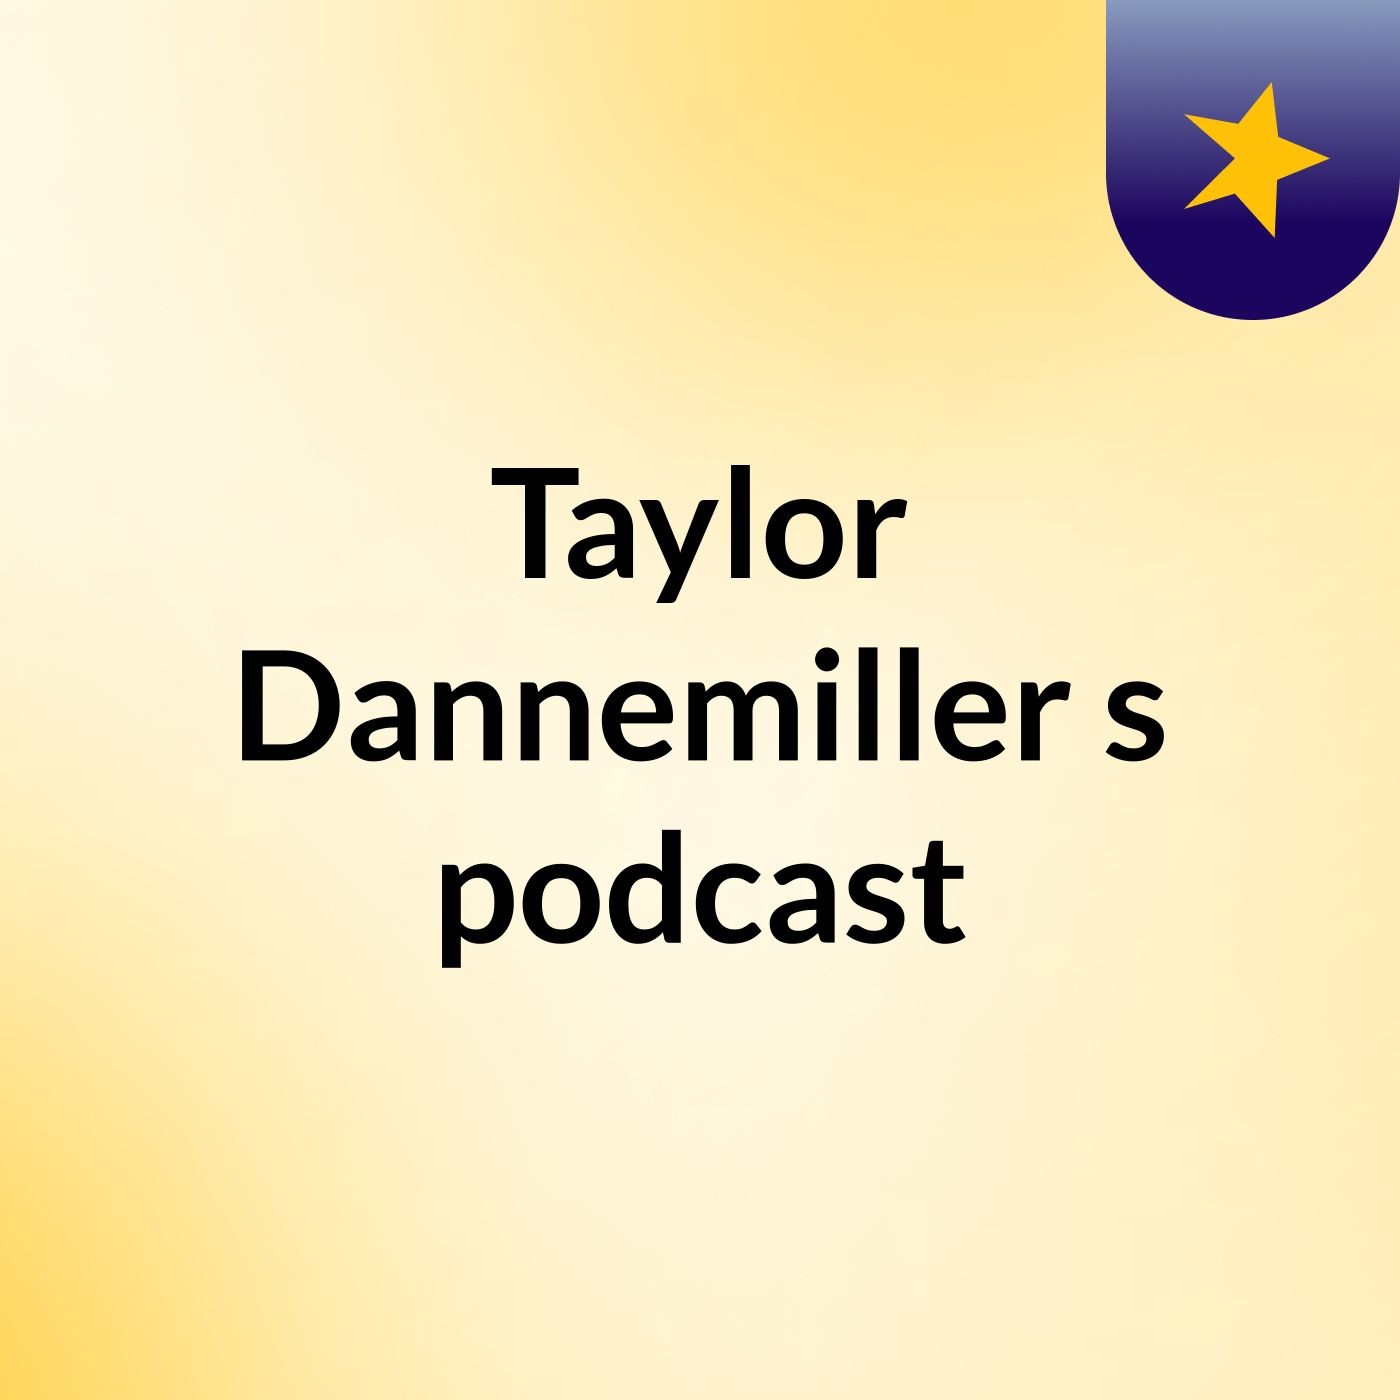 Taylor Dannemiller's podcast